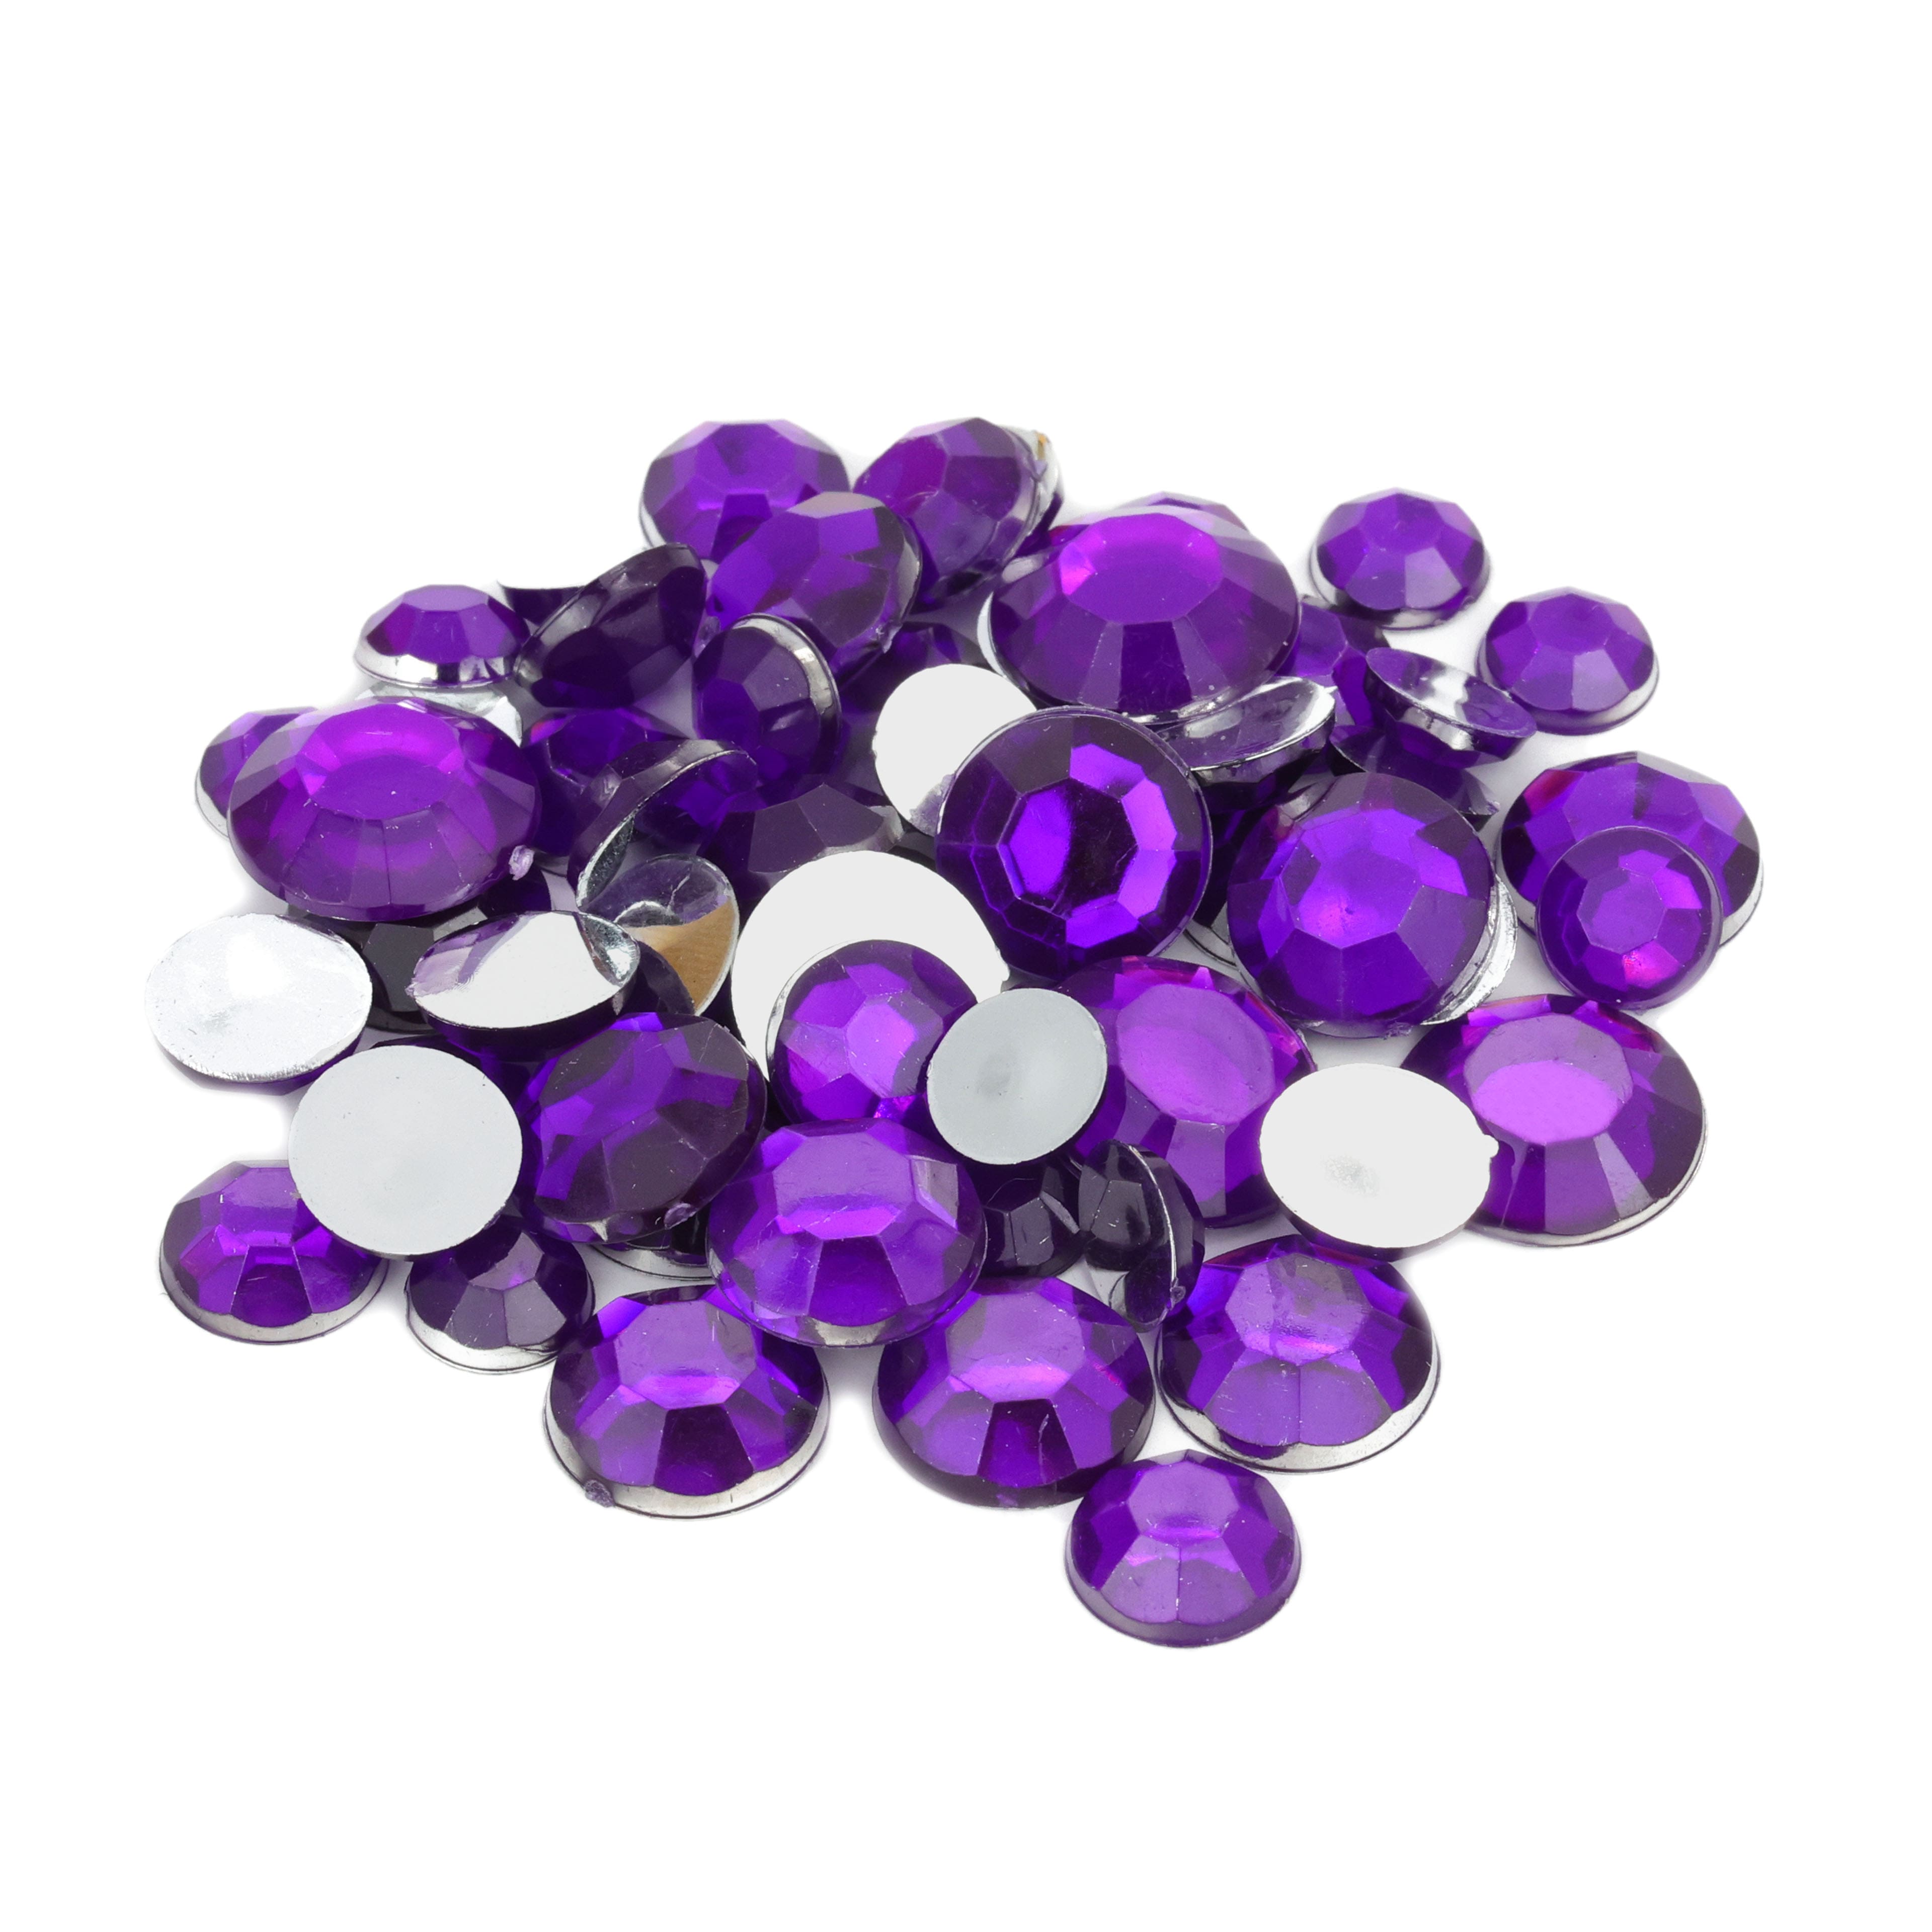 Creatology Round Mix Gems - Purple - Each